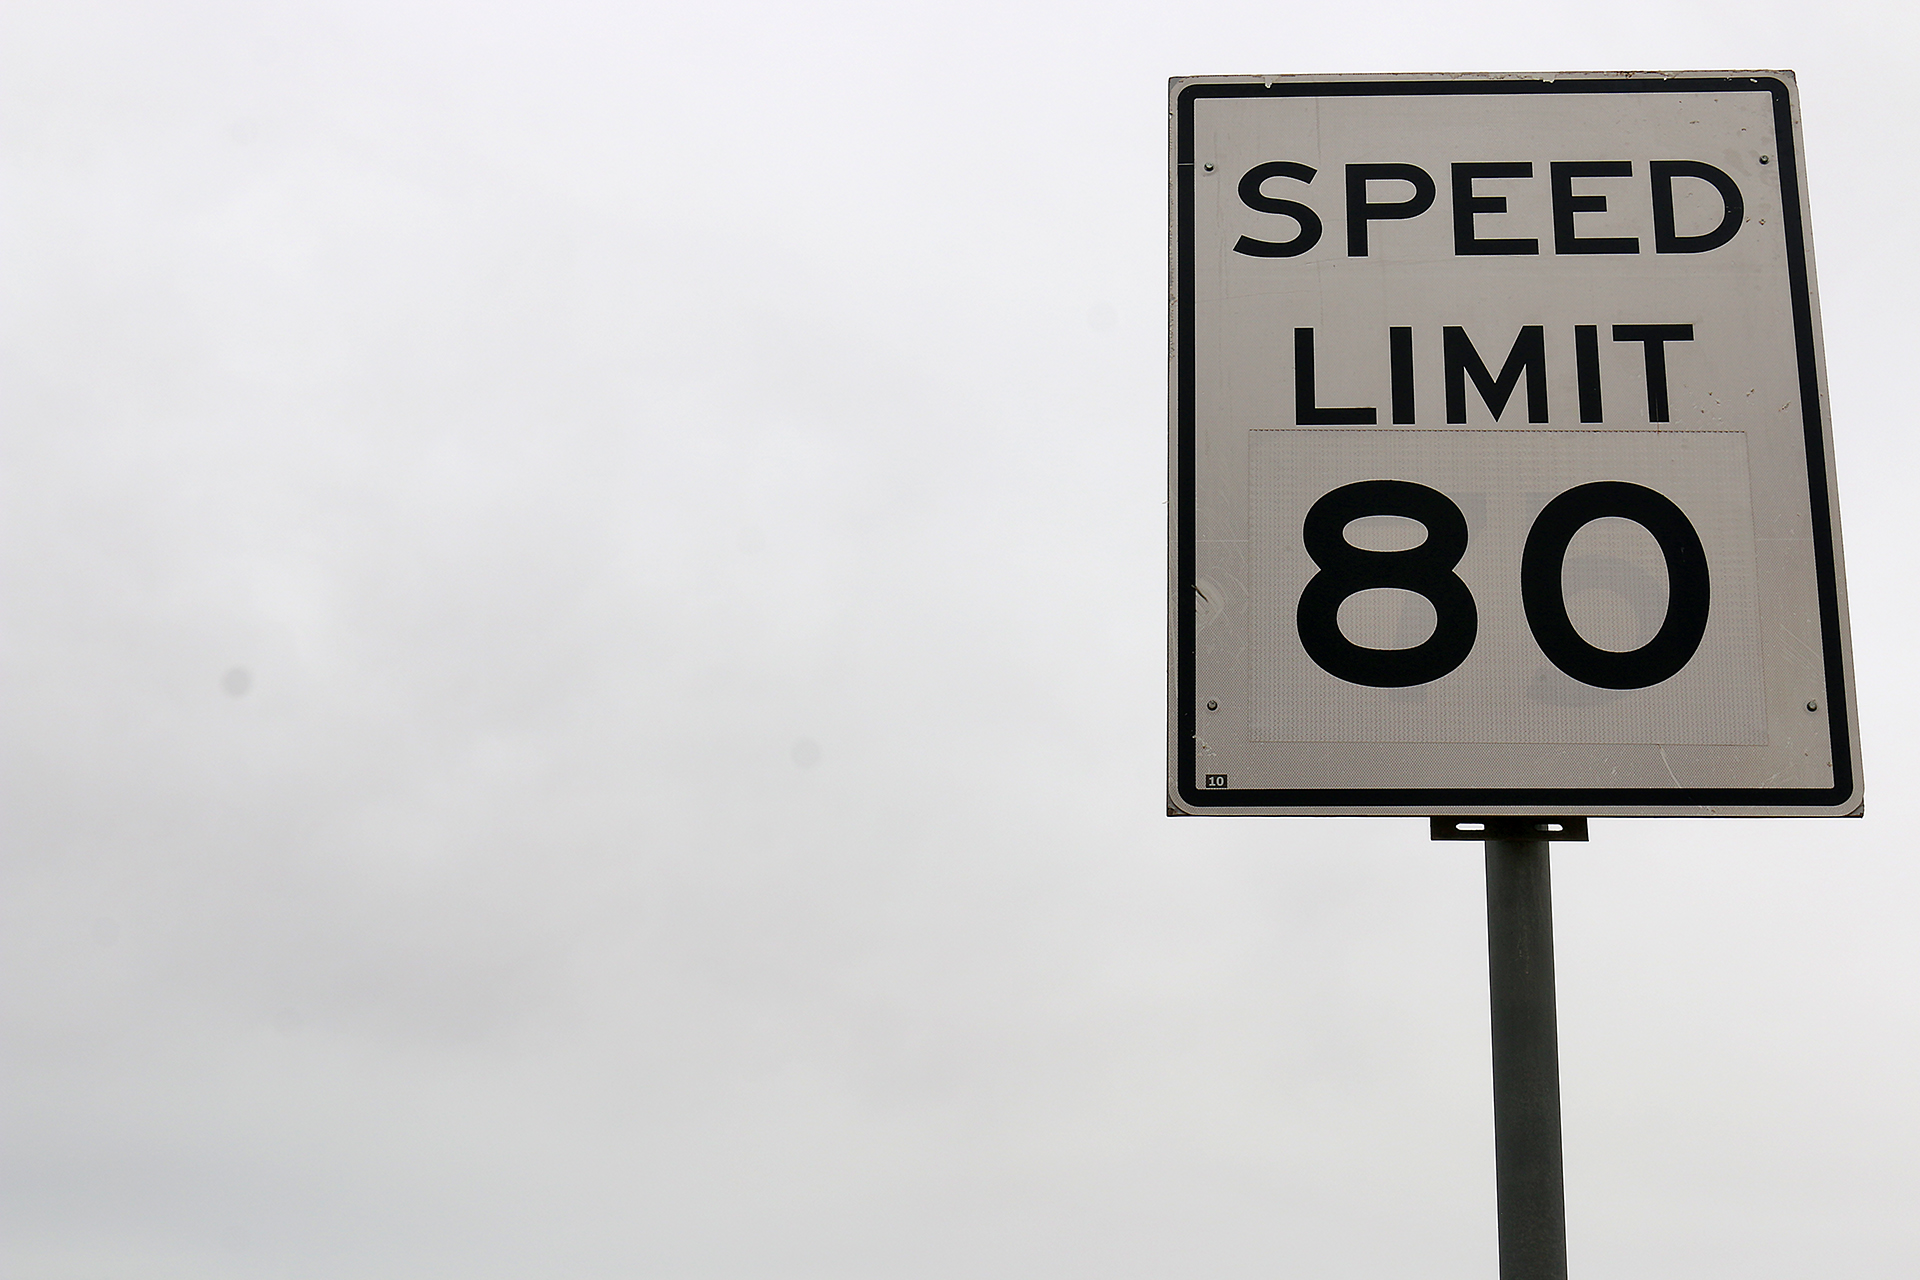 a speed limit sign on a pole